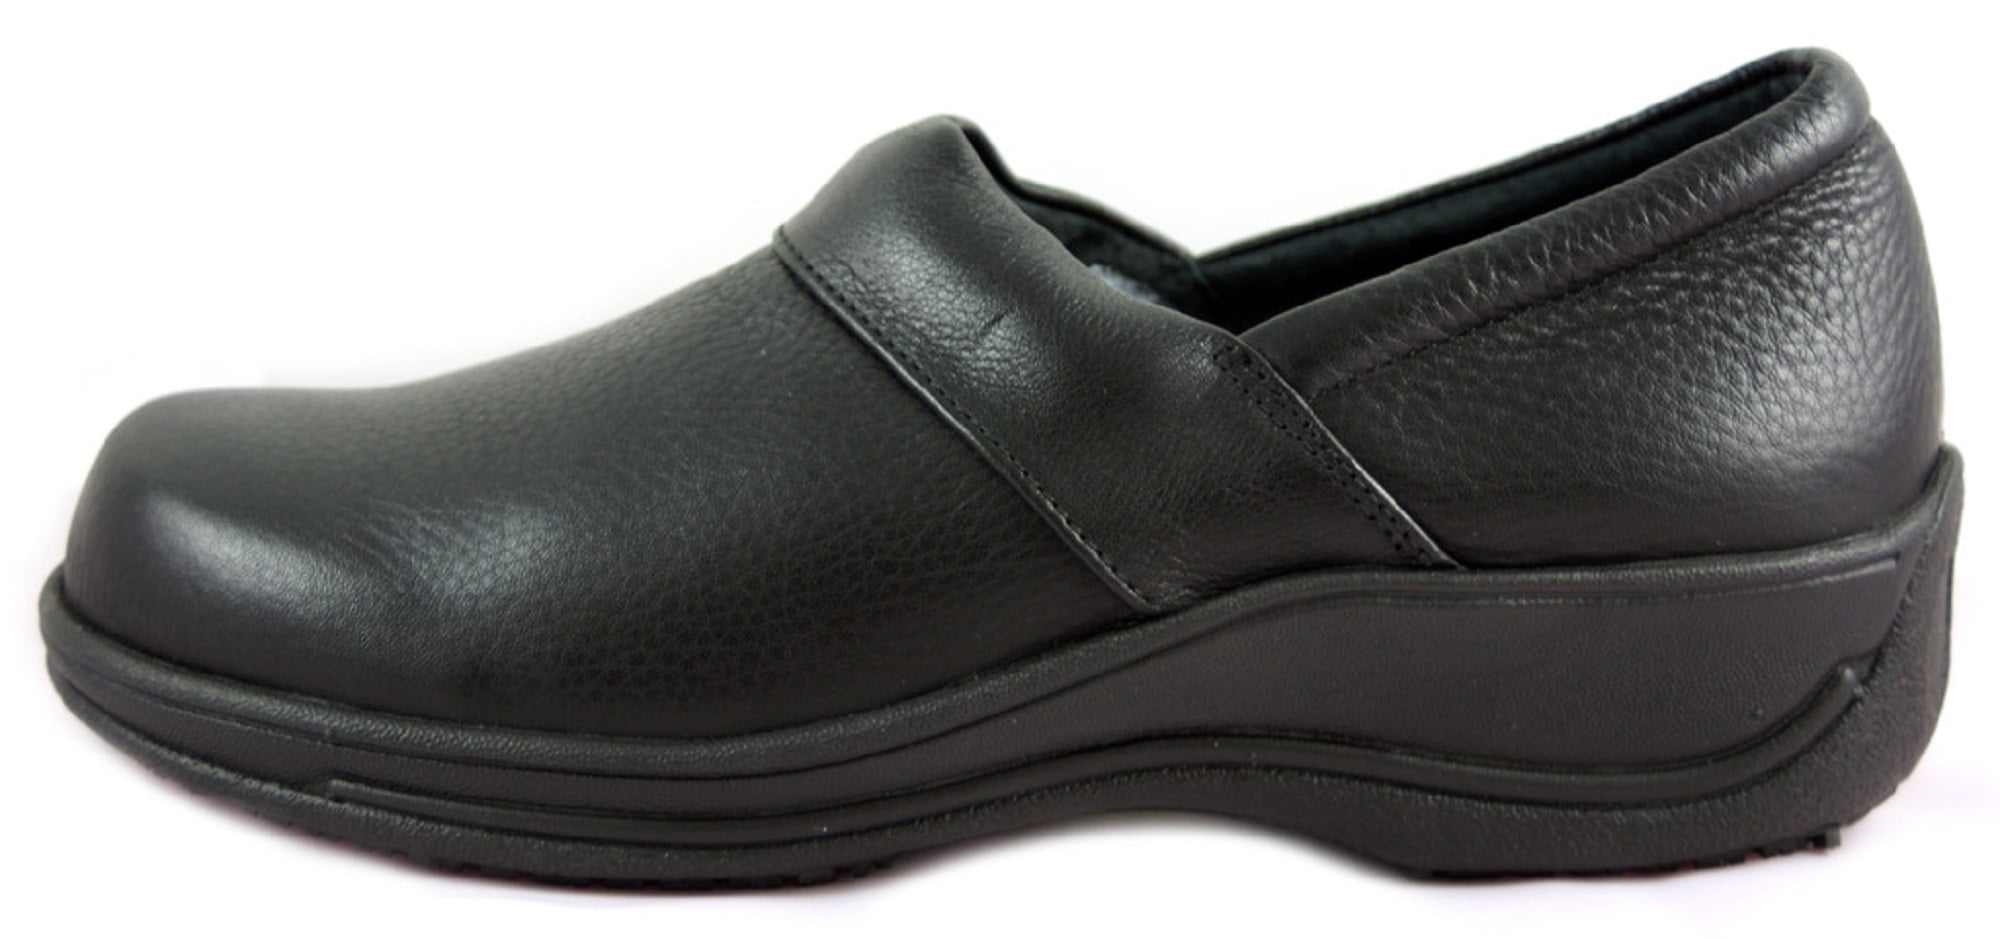 women's non slip work shoes walmart